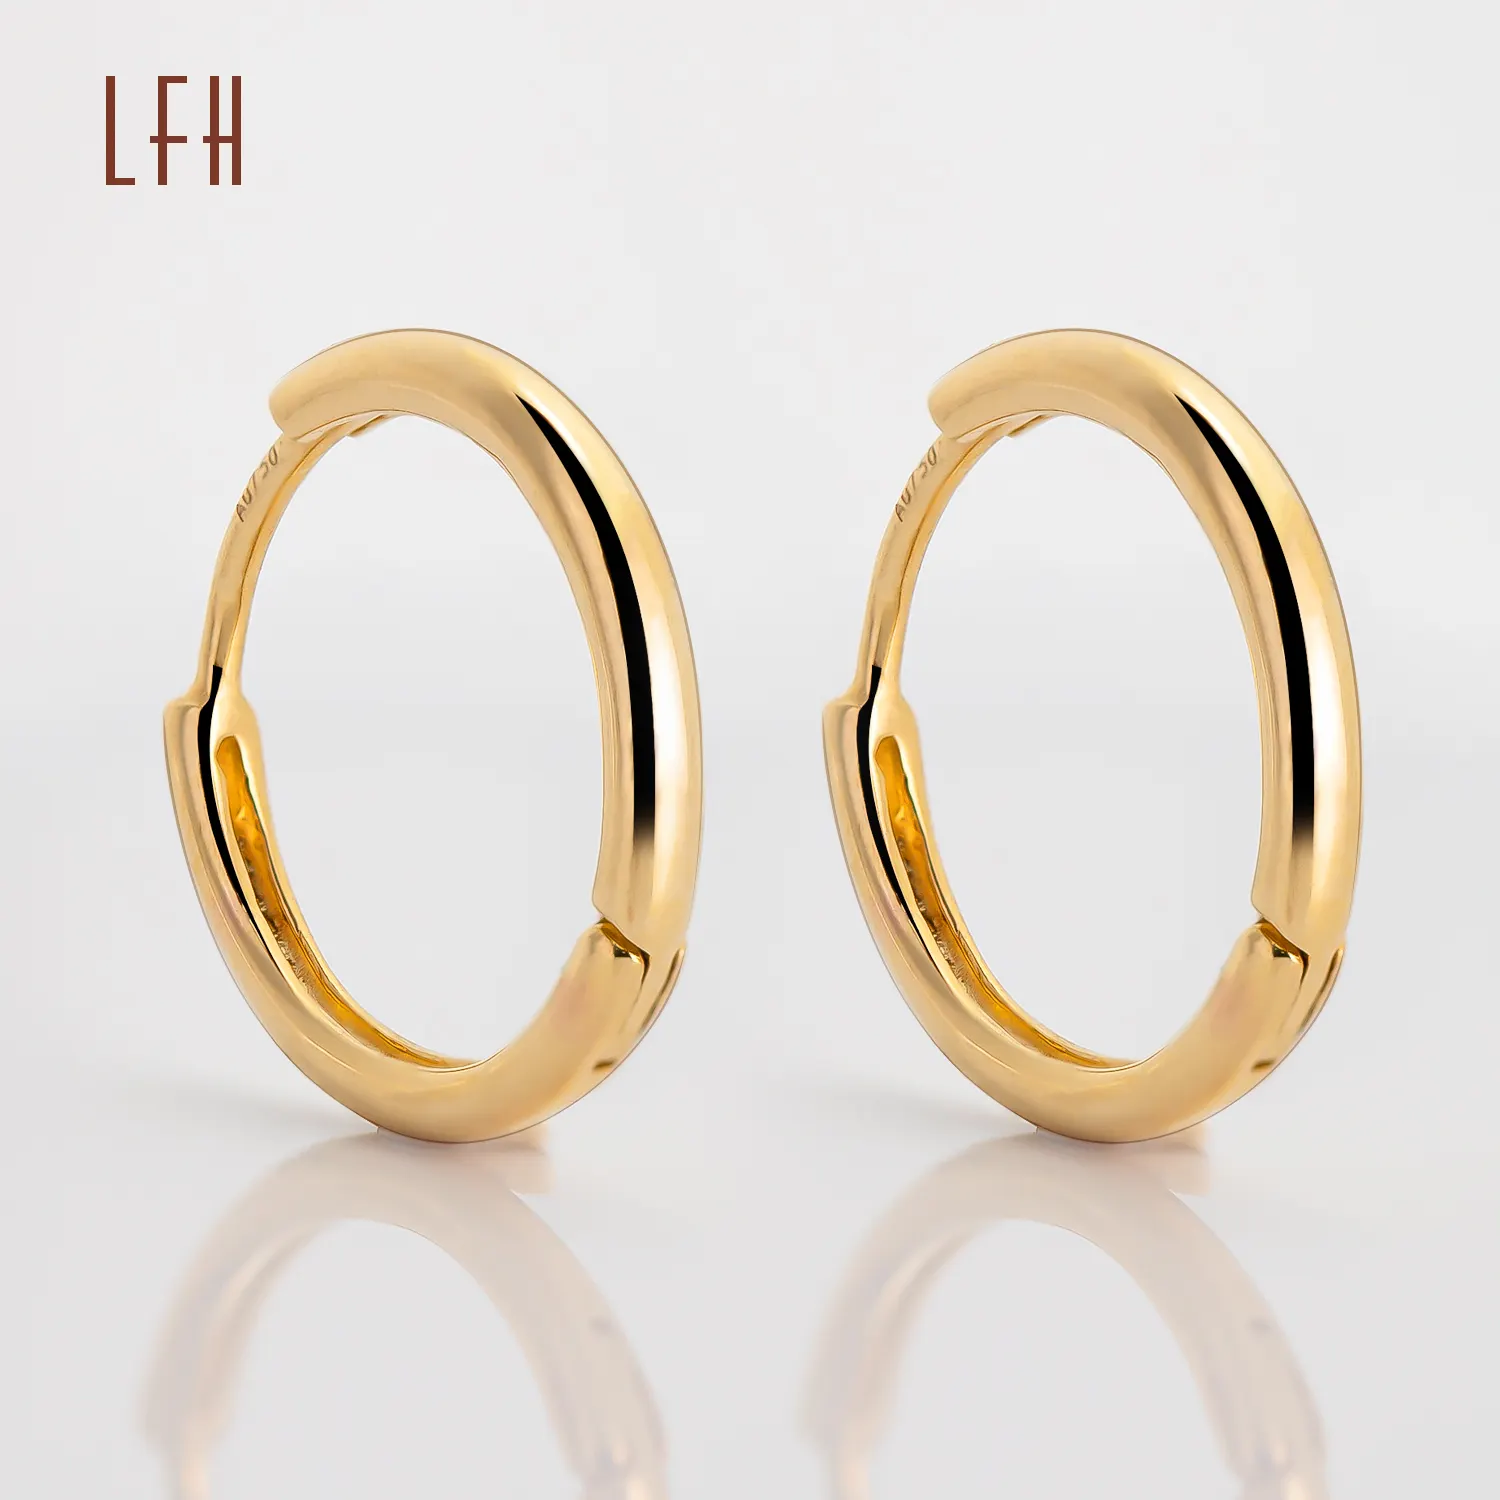 LFH Wholesale 18k Real Gold Mini 6mm 8mm 10mm Hoops Earrings Thin Hoop Earring 18k Solid Gold Small Hoop Earrings